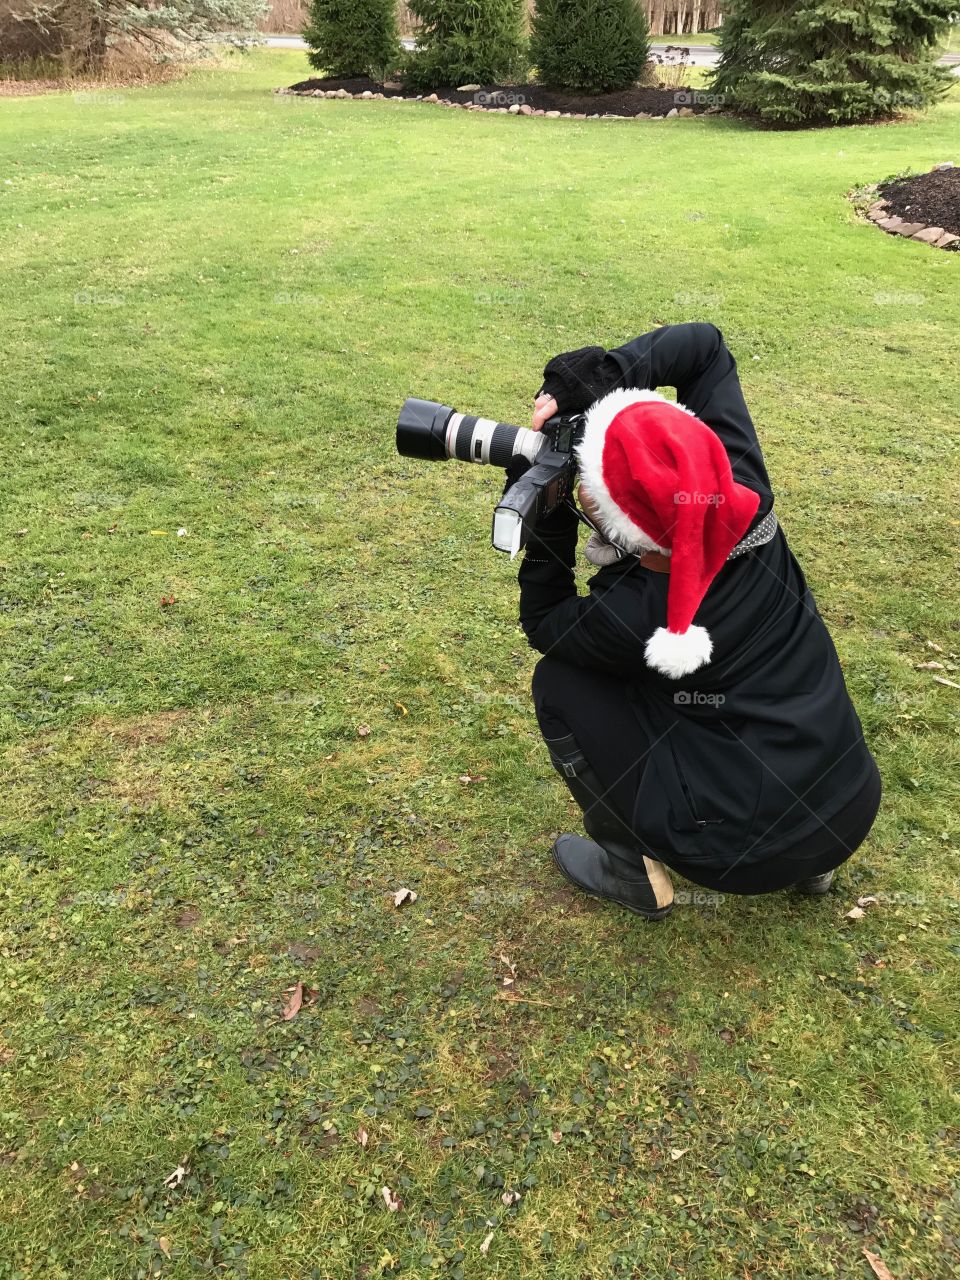 Taking photos of Santa wearing a Santa hat